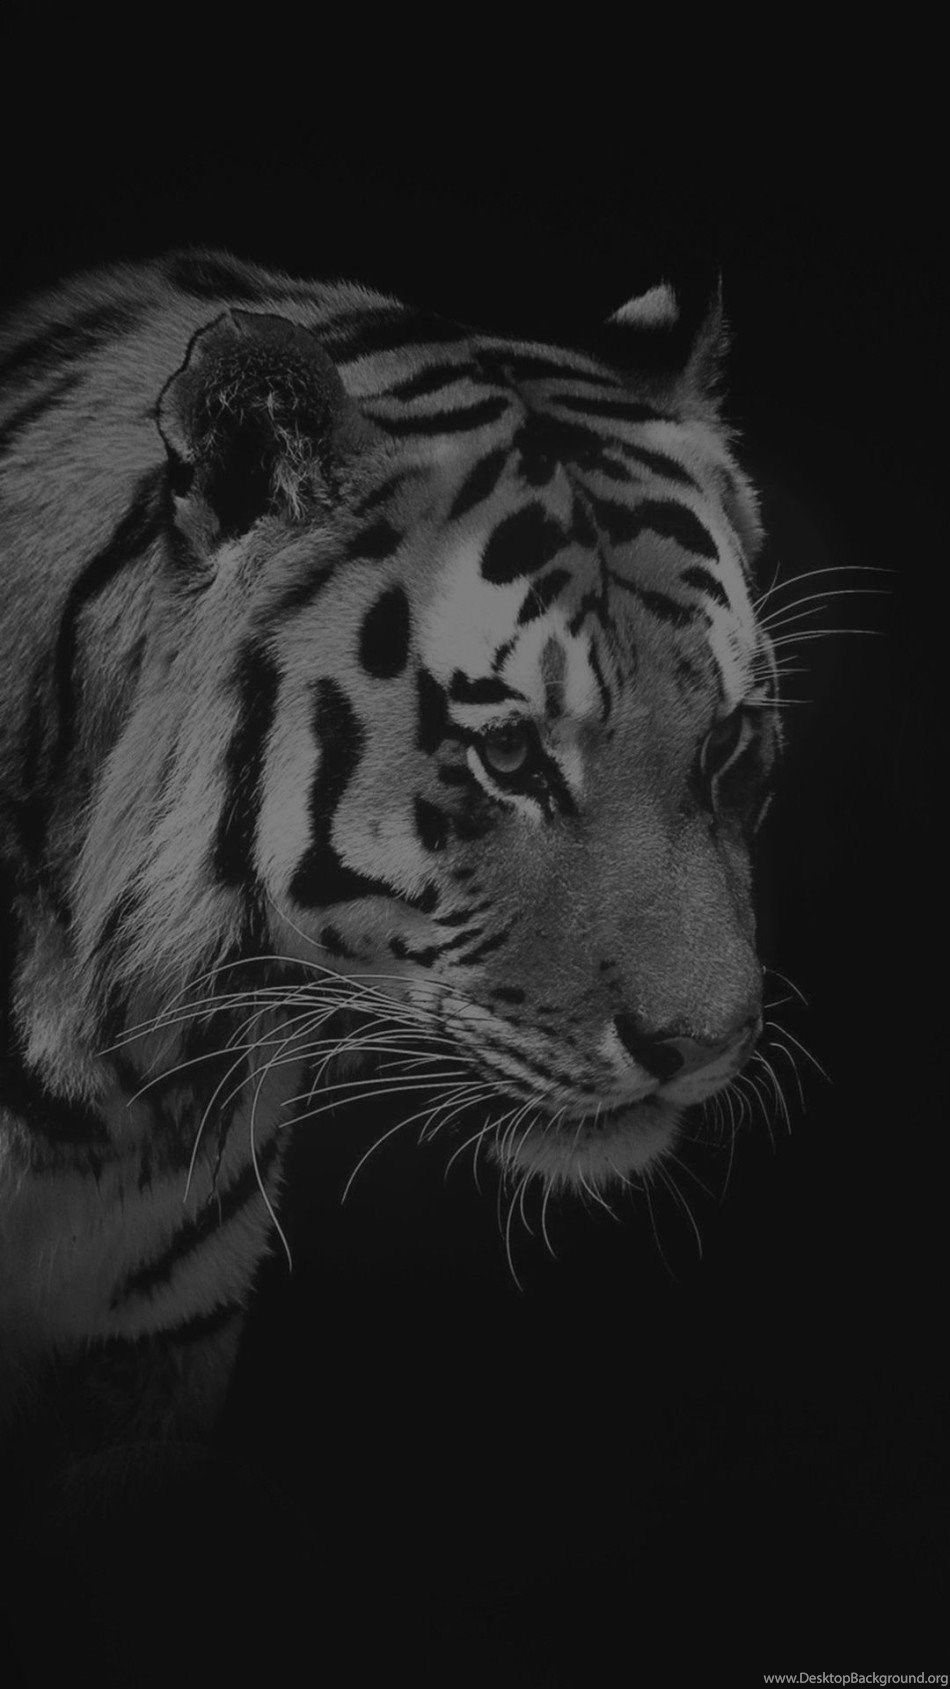 Tiger Dark Animal Love Nature iPhone 6 Wallpaper Free Desktop Background